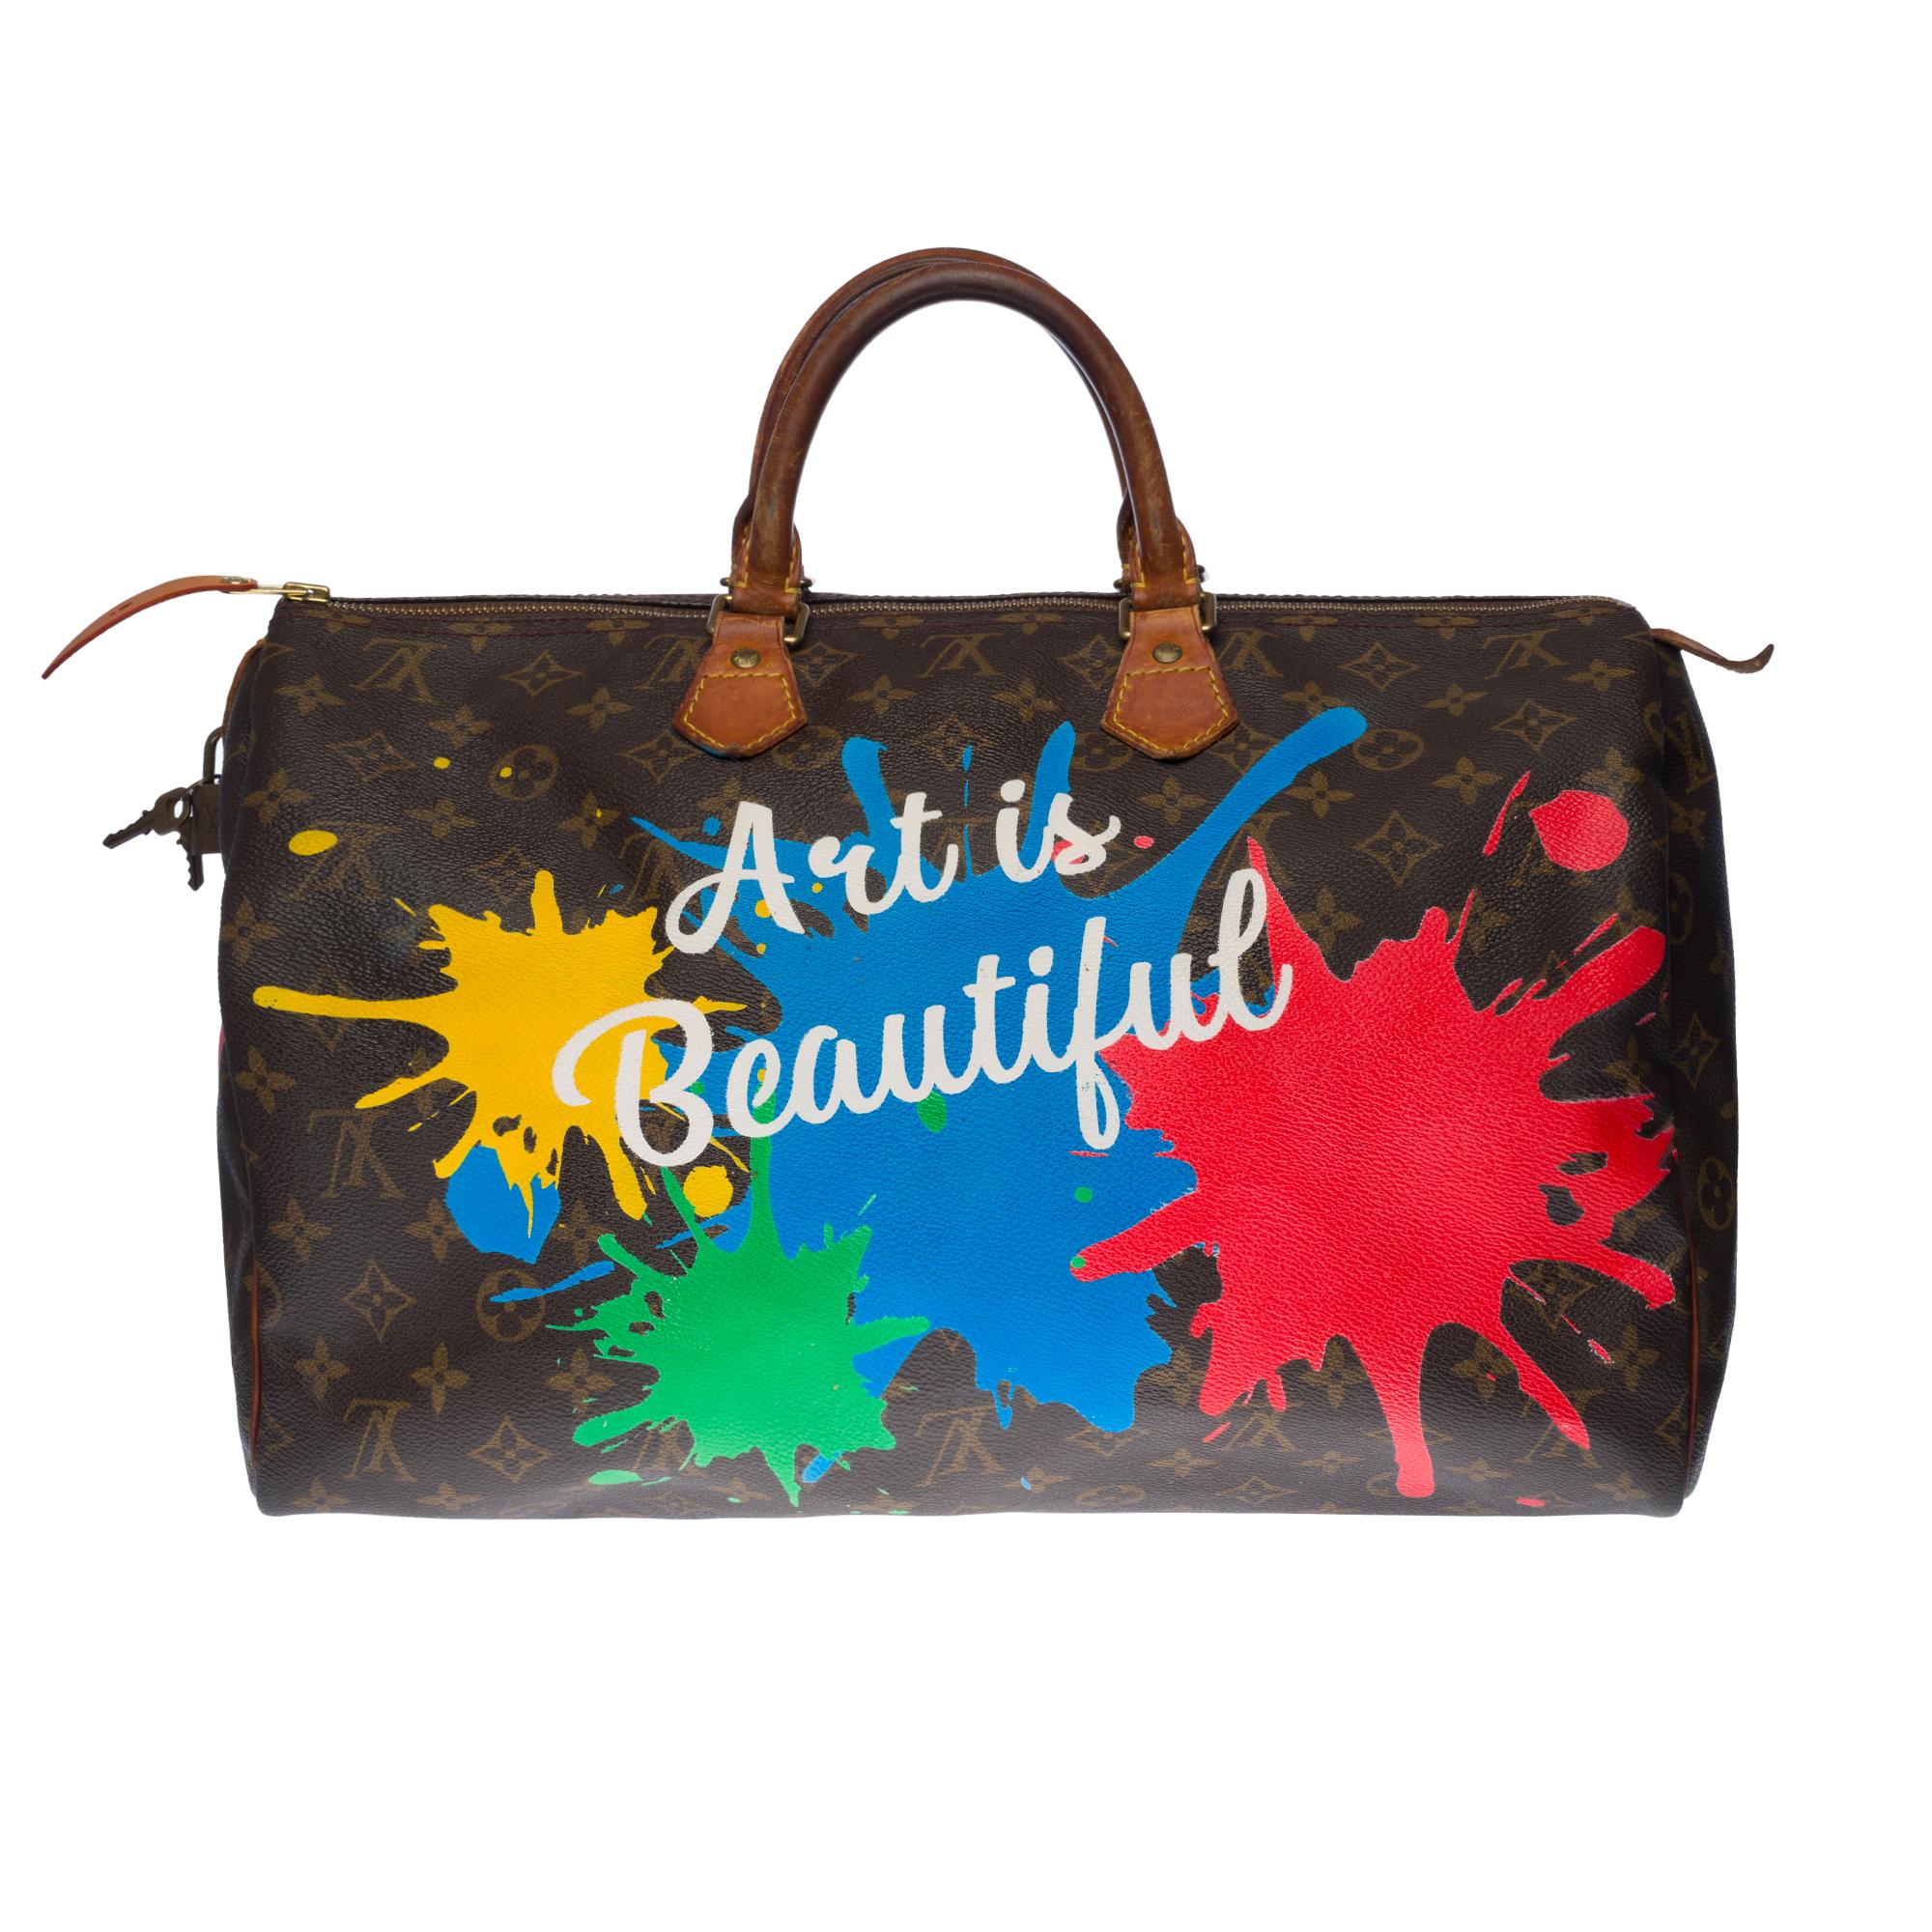 Superb Louis Vuitton Speedy 40 handbag in customized Monogram canvas 